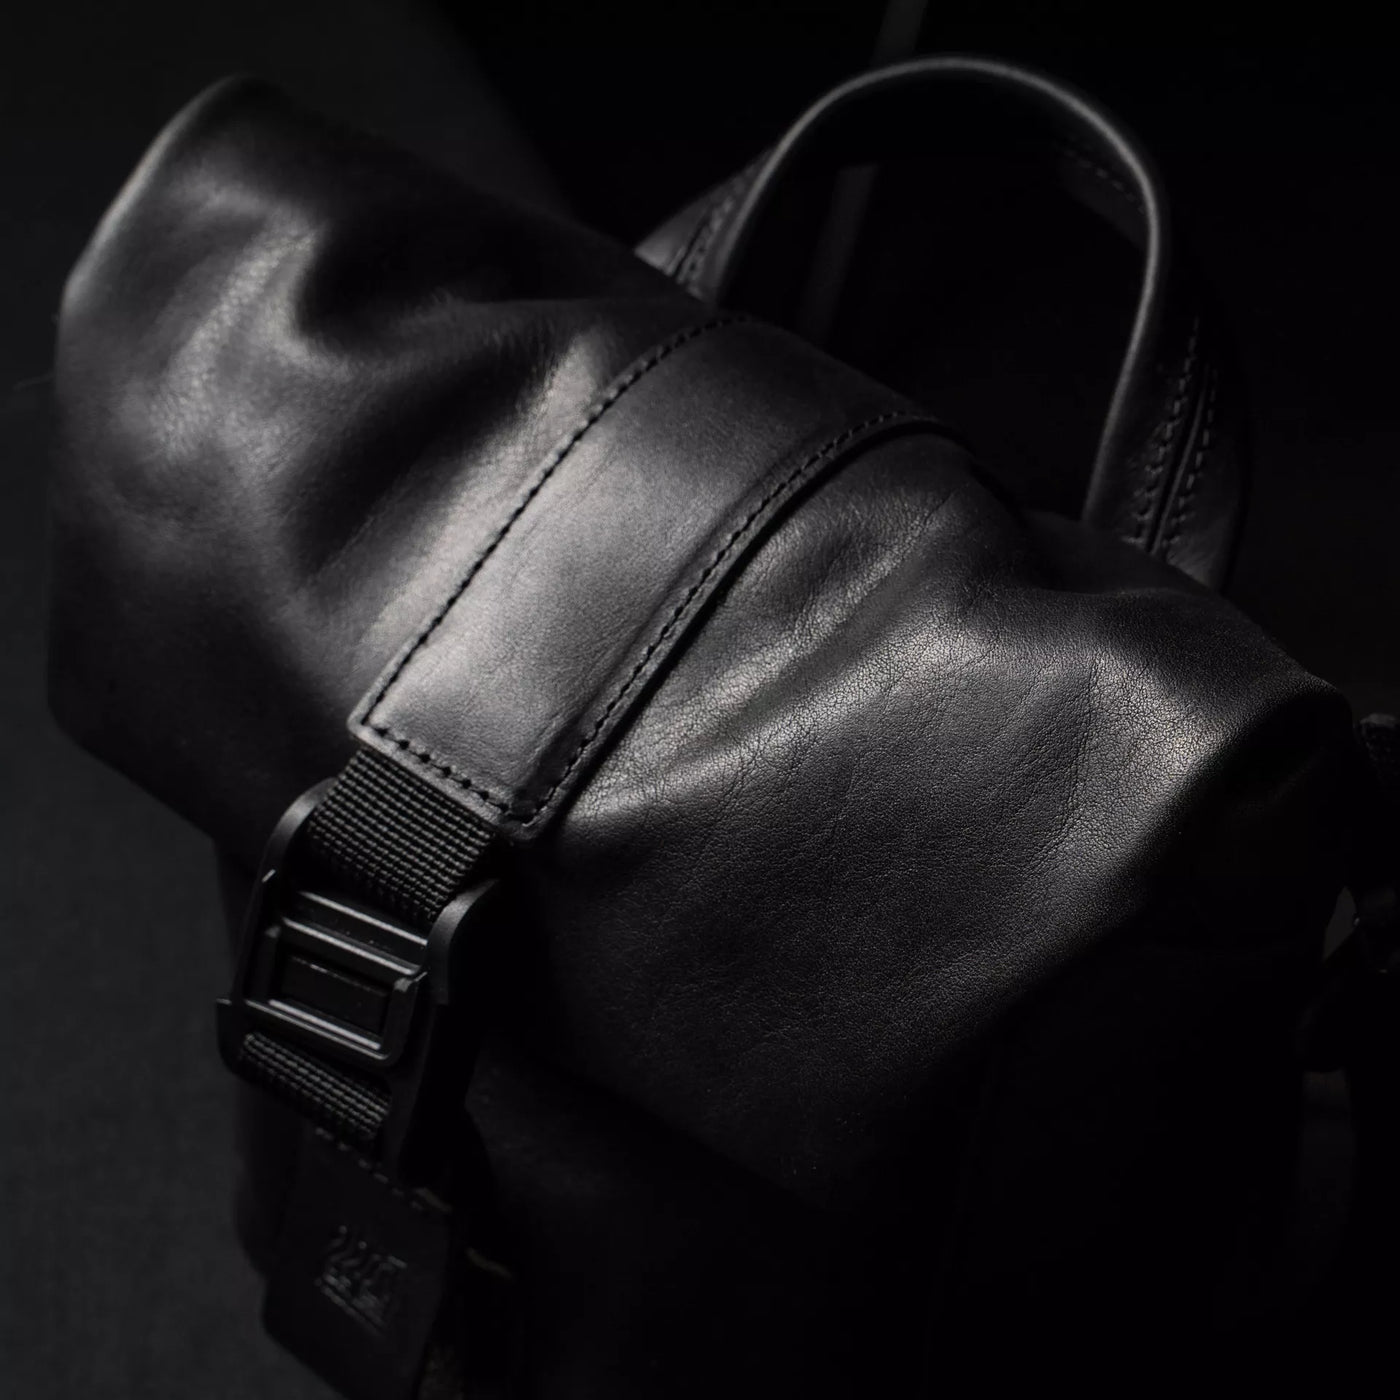 Leather Pilot Travel Camera Bag | 2L Upgraded